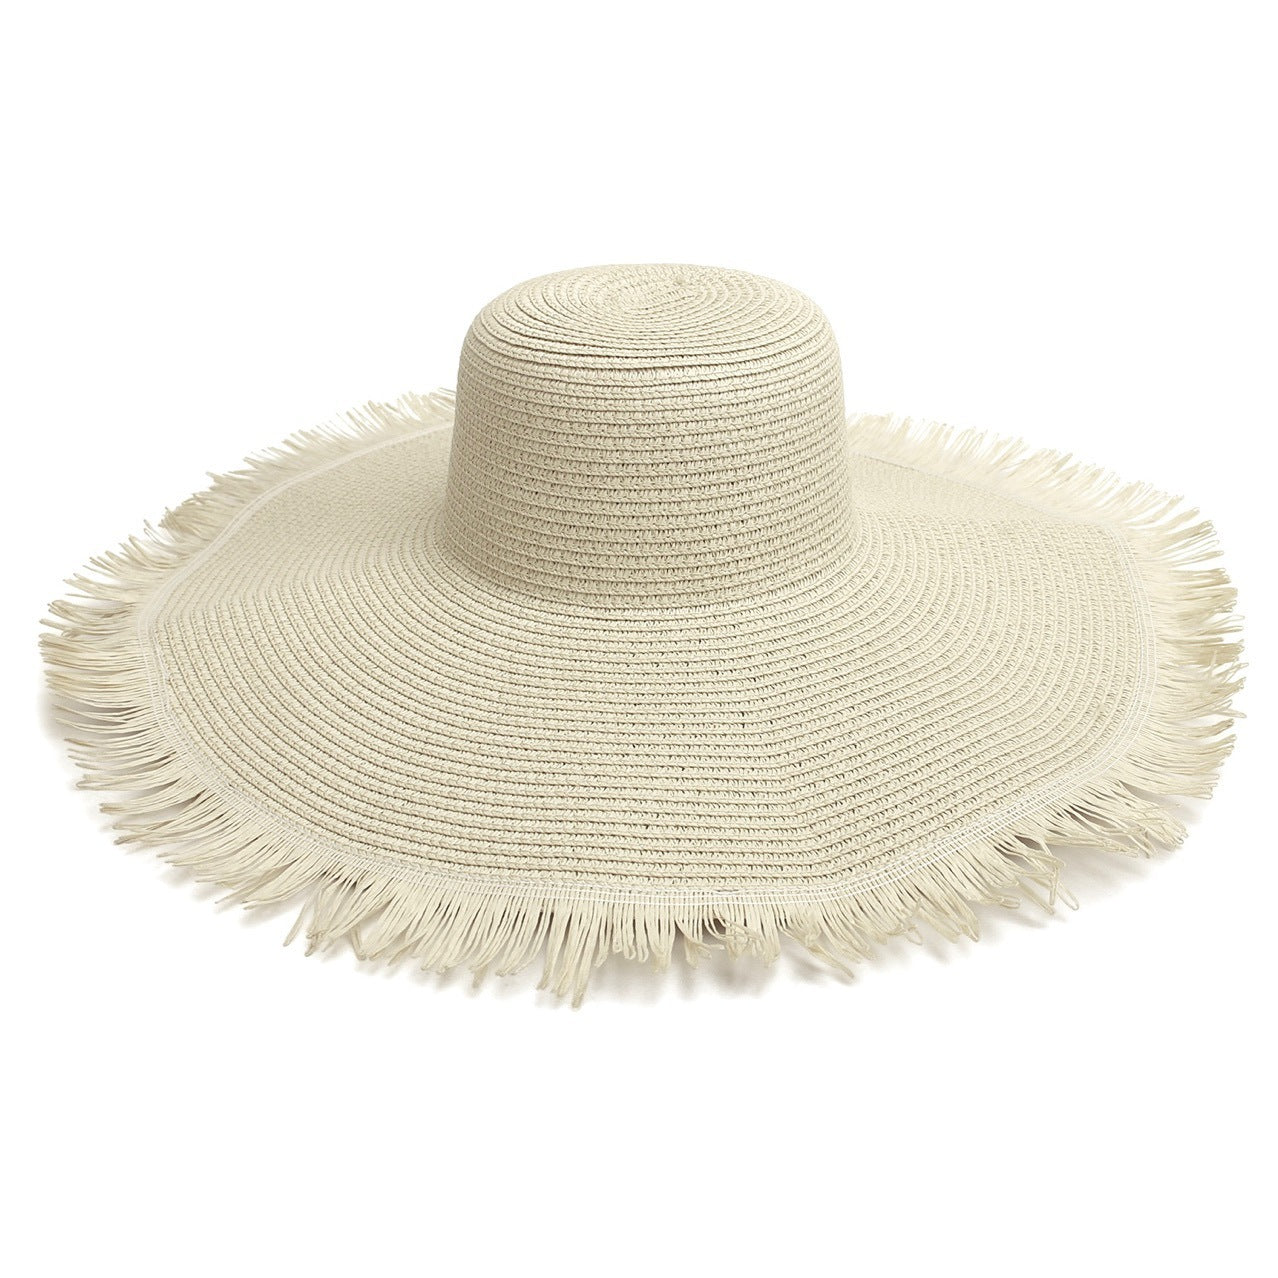 Women's Big Brim Beach Sun Hat - Woven Straw Design from Eternal Gleams